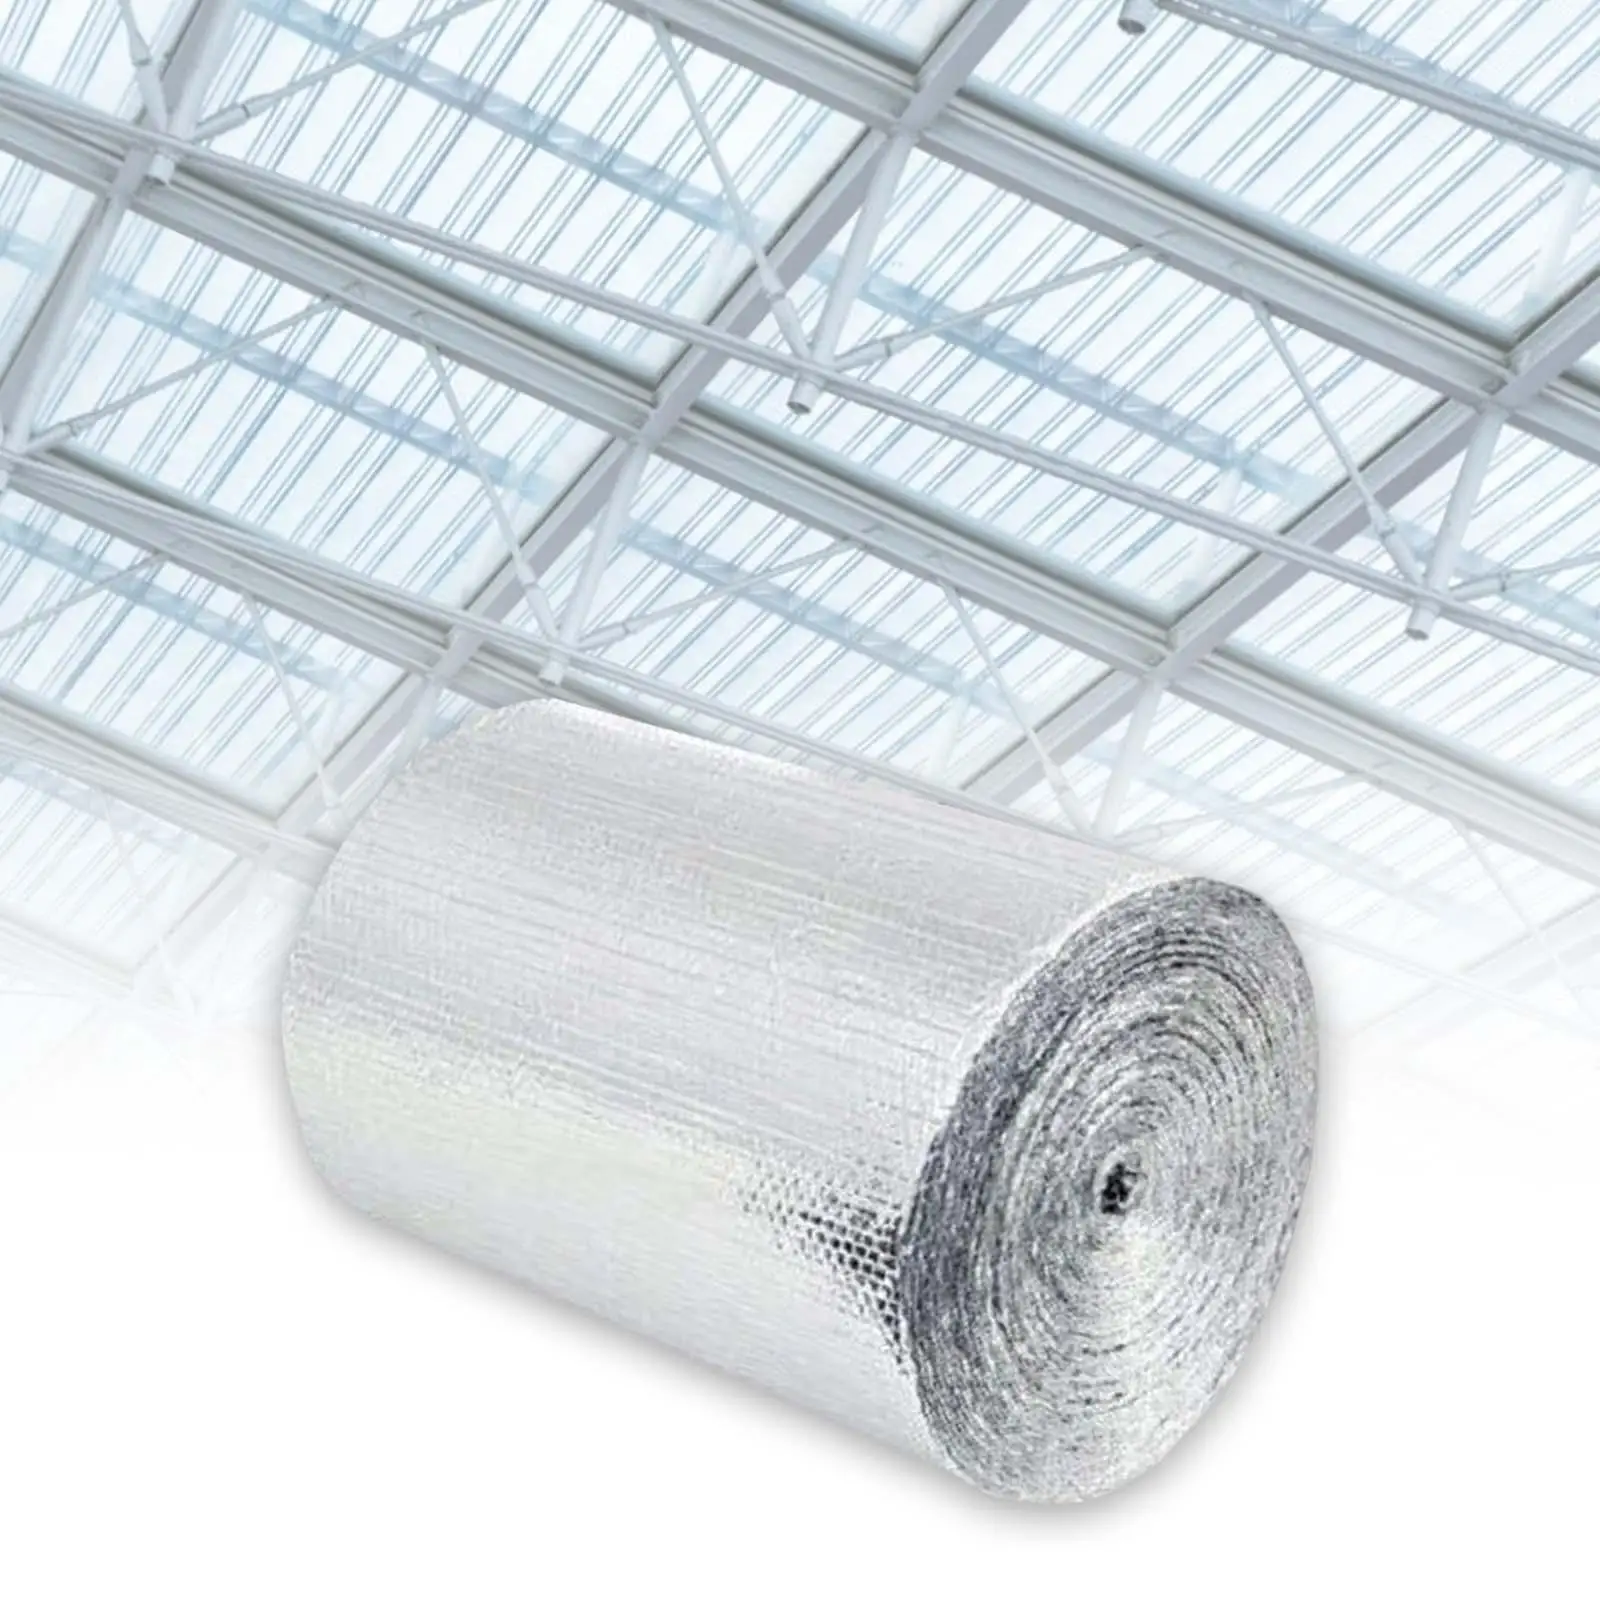 Thermal Insulation Aluminized Film Wear Resistant Multipurpose for Windows